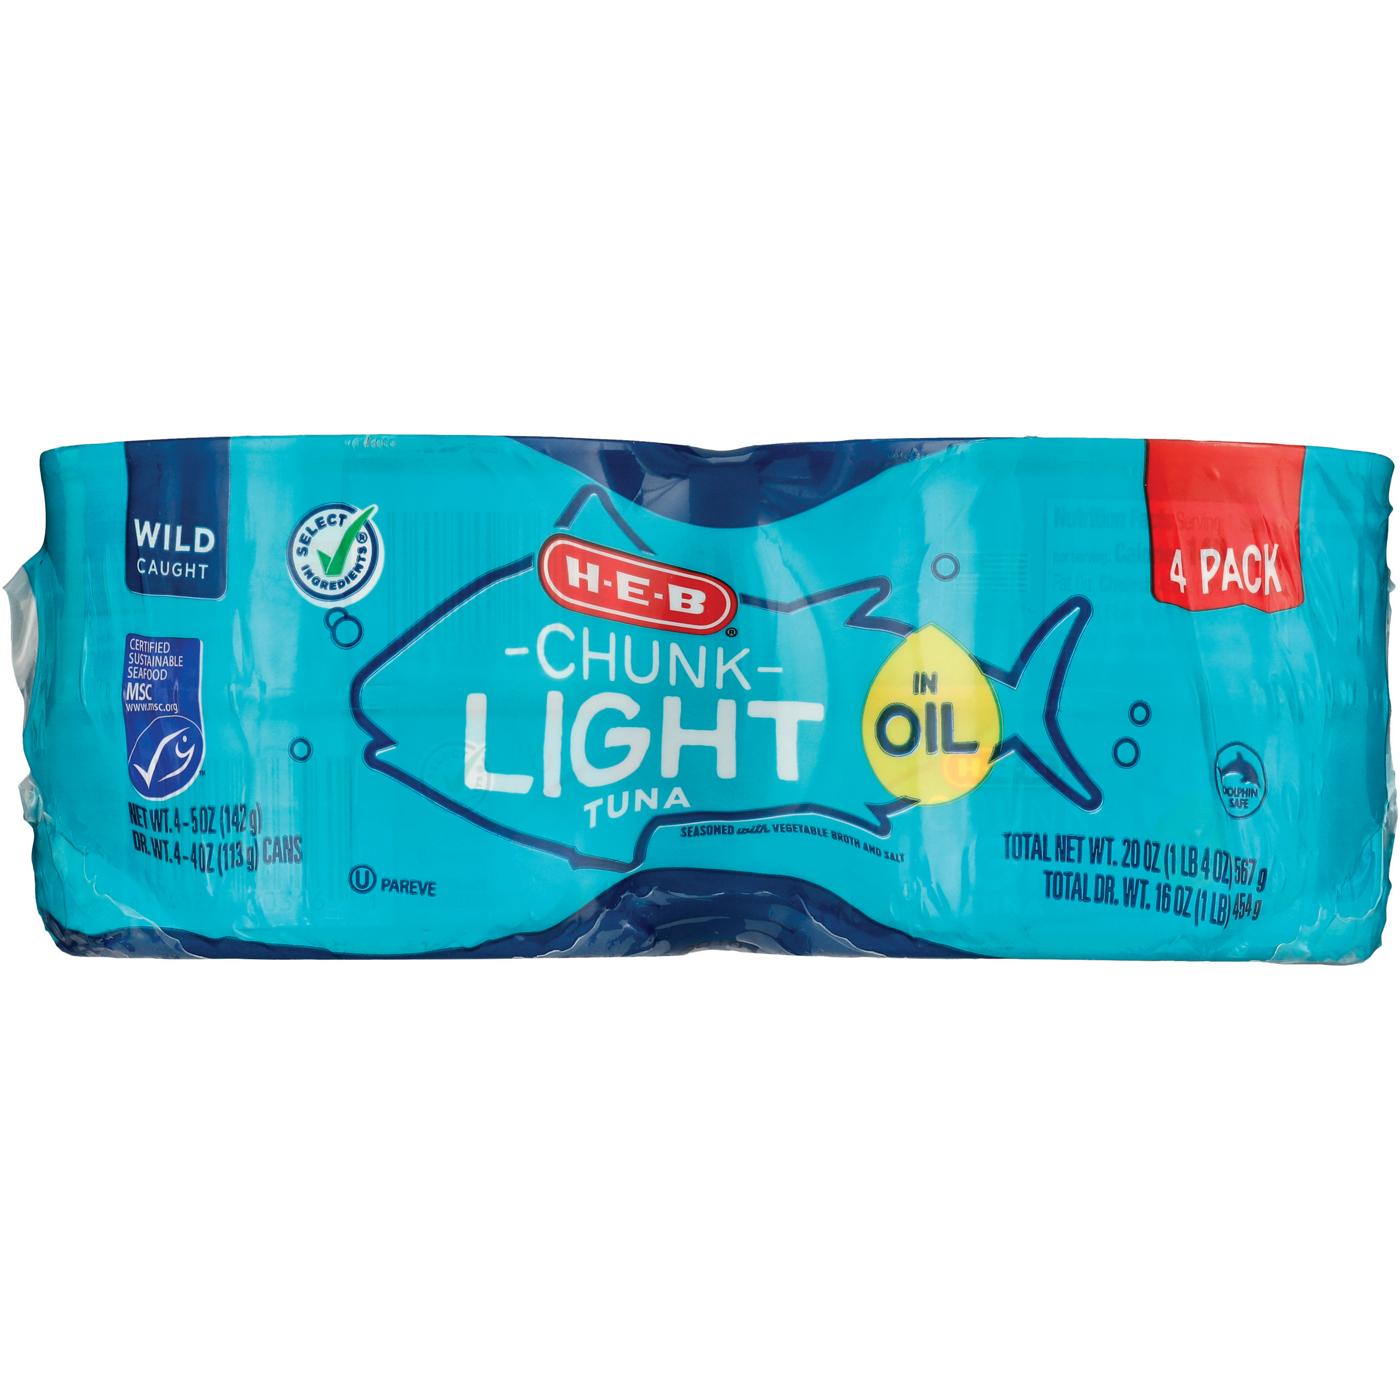 H-E-B Chunk Light Tuna in Oil; image 1 of 2